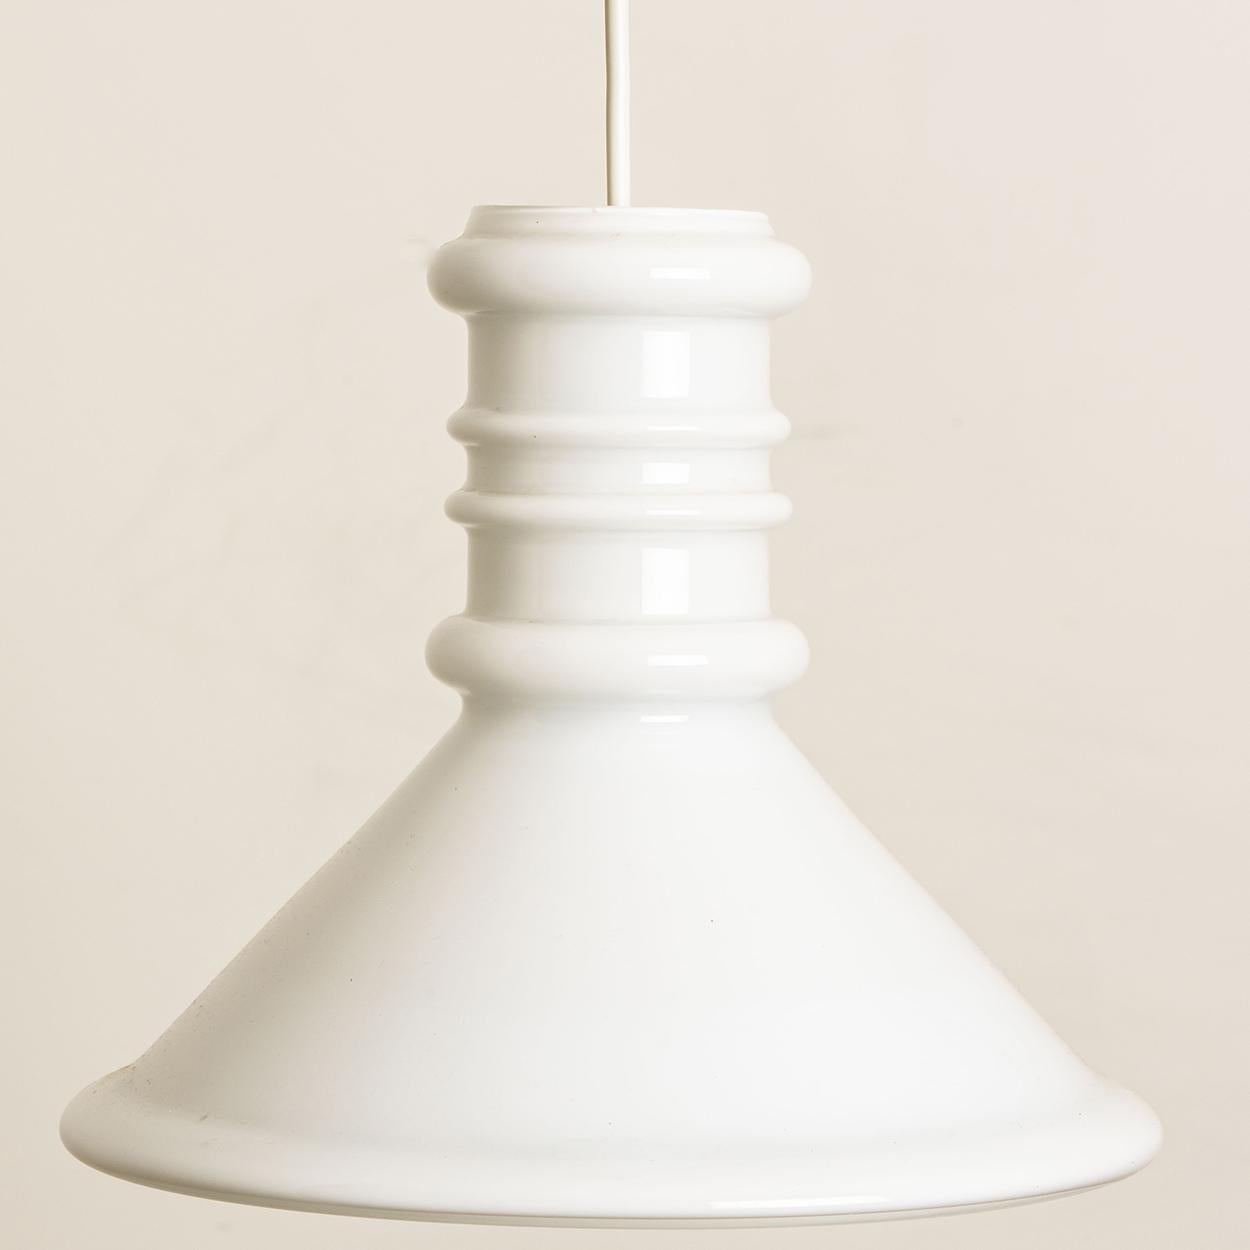 1 of the 7 Danische Hanging Lamps, 1970 For Sale 1